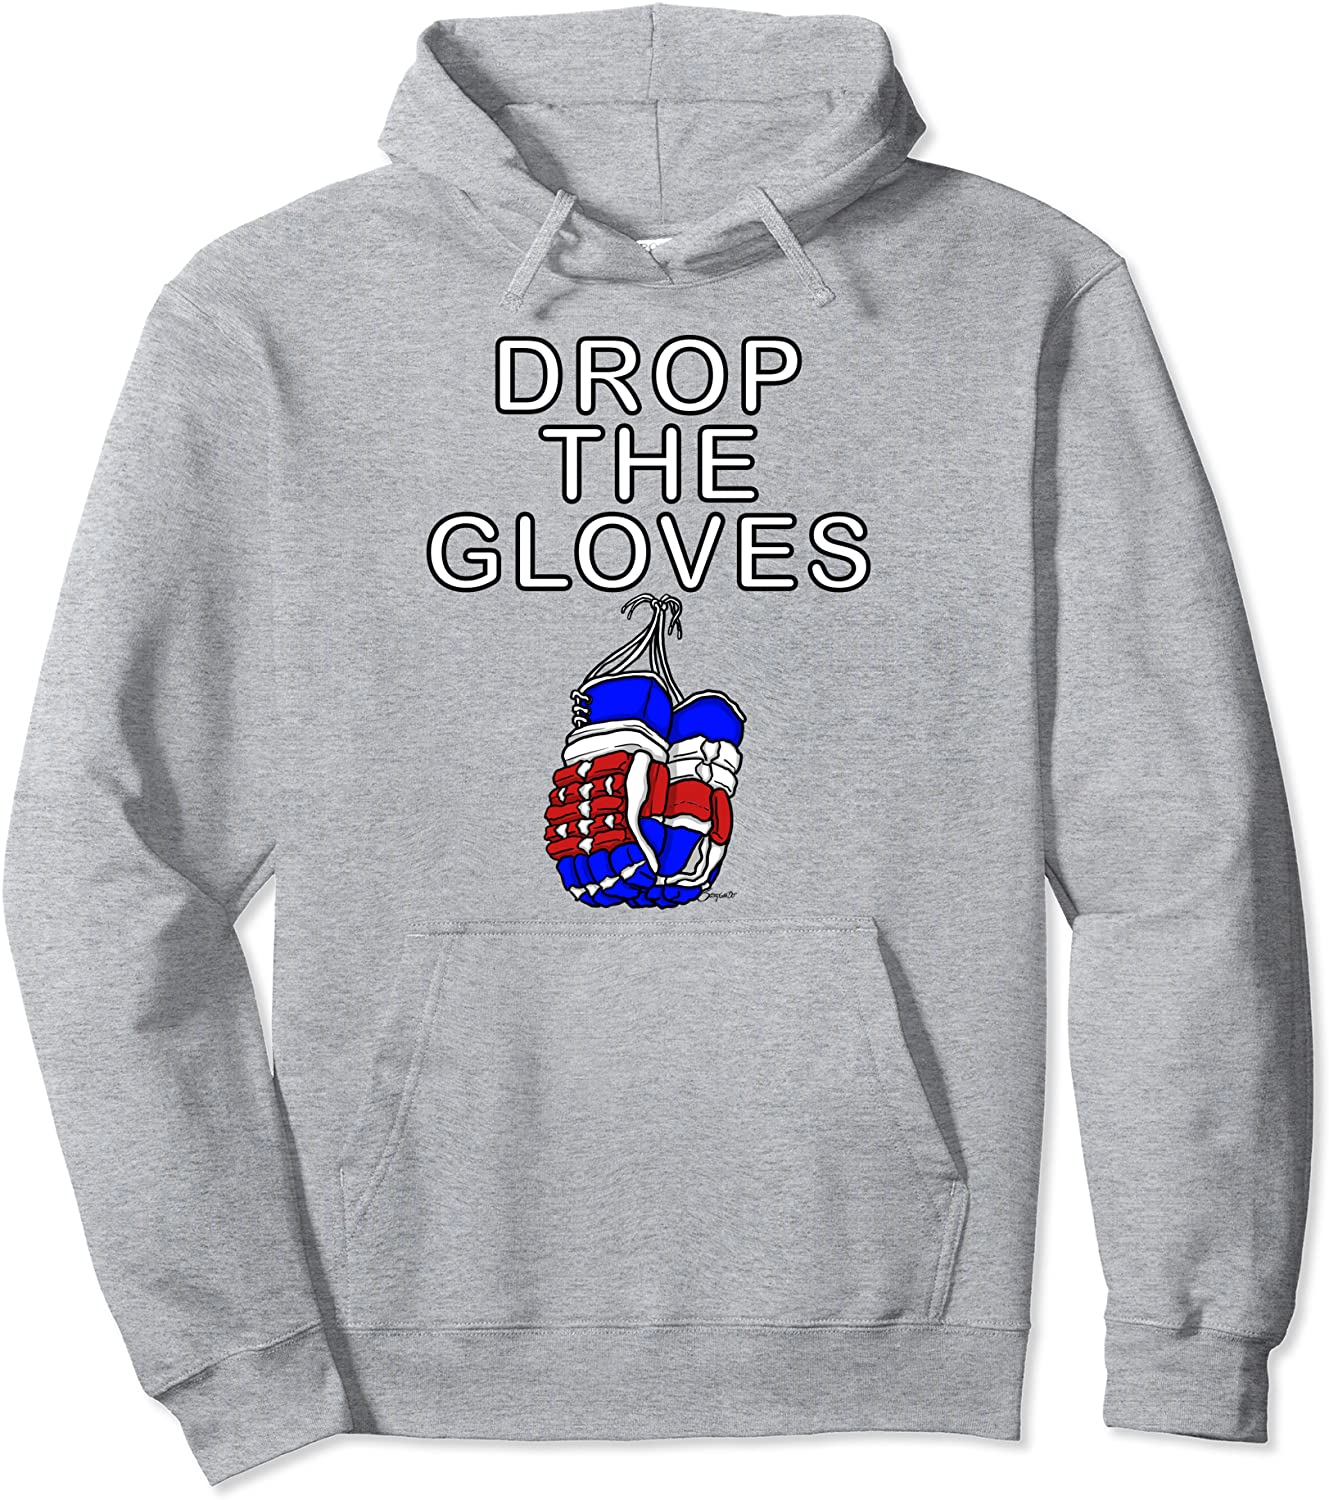 DROP THE GLOVES Ice Hockey Gloves Hoodie